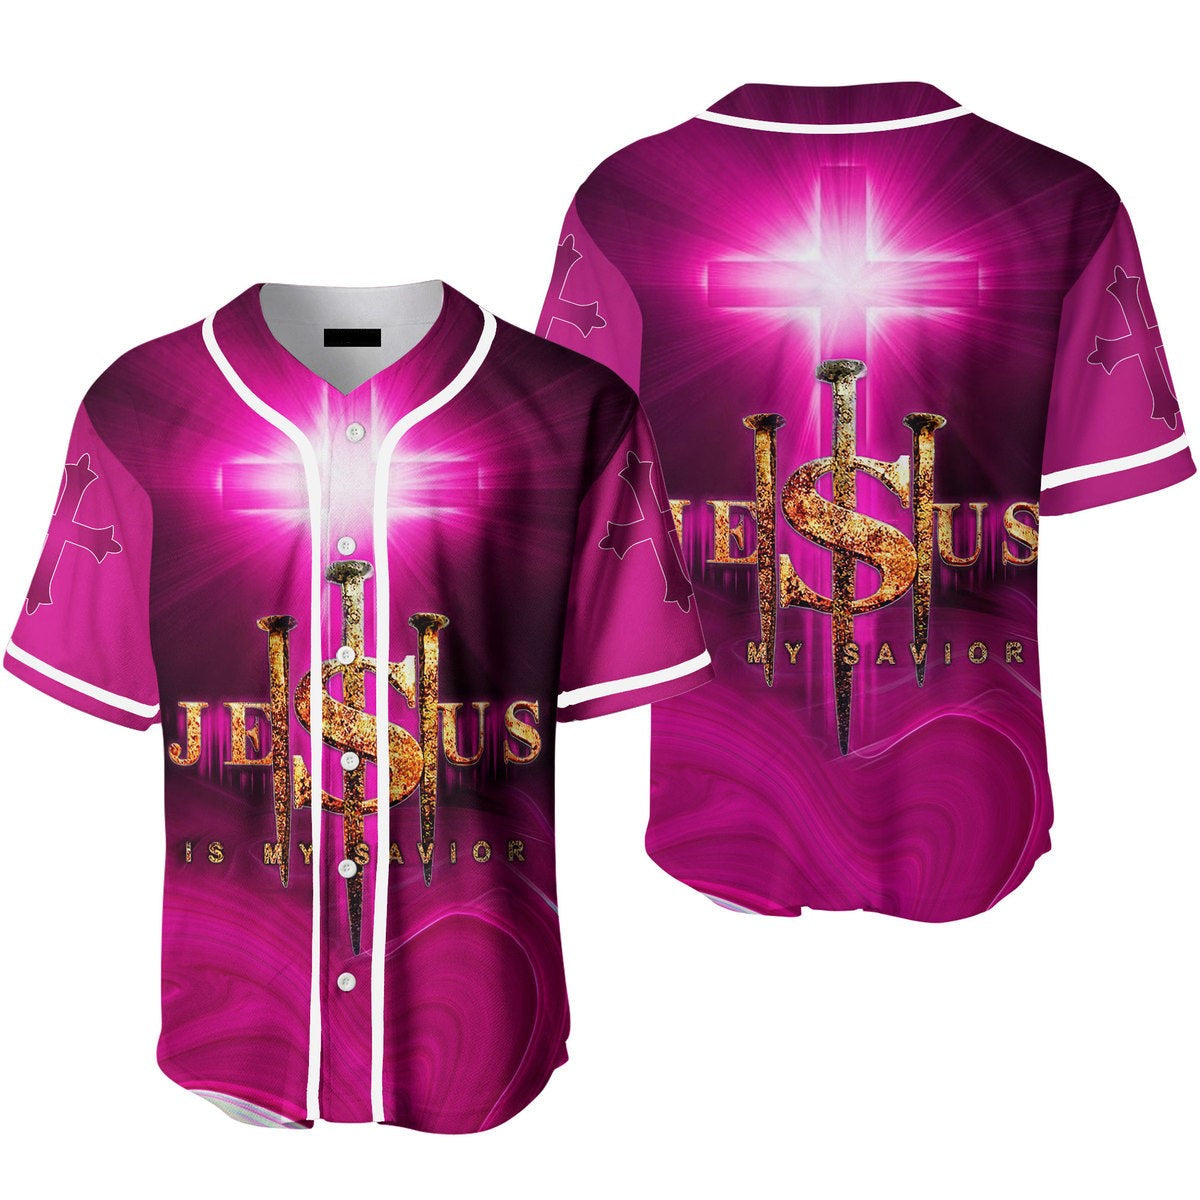 Jesus Baseball Jersey Nails My Savior Jesus Jersey Shirt Pink Unisex Adult New Release